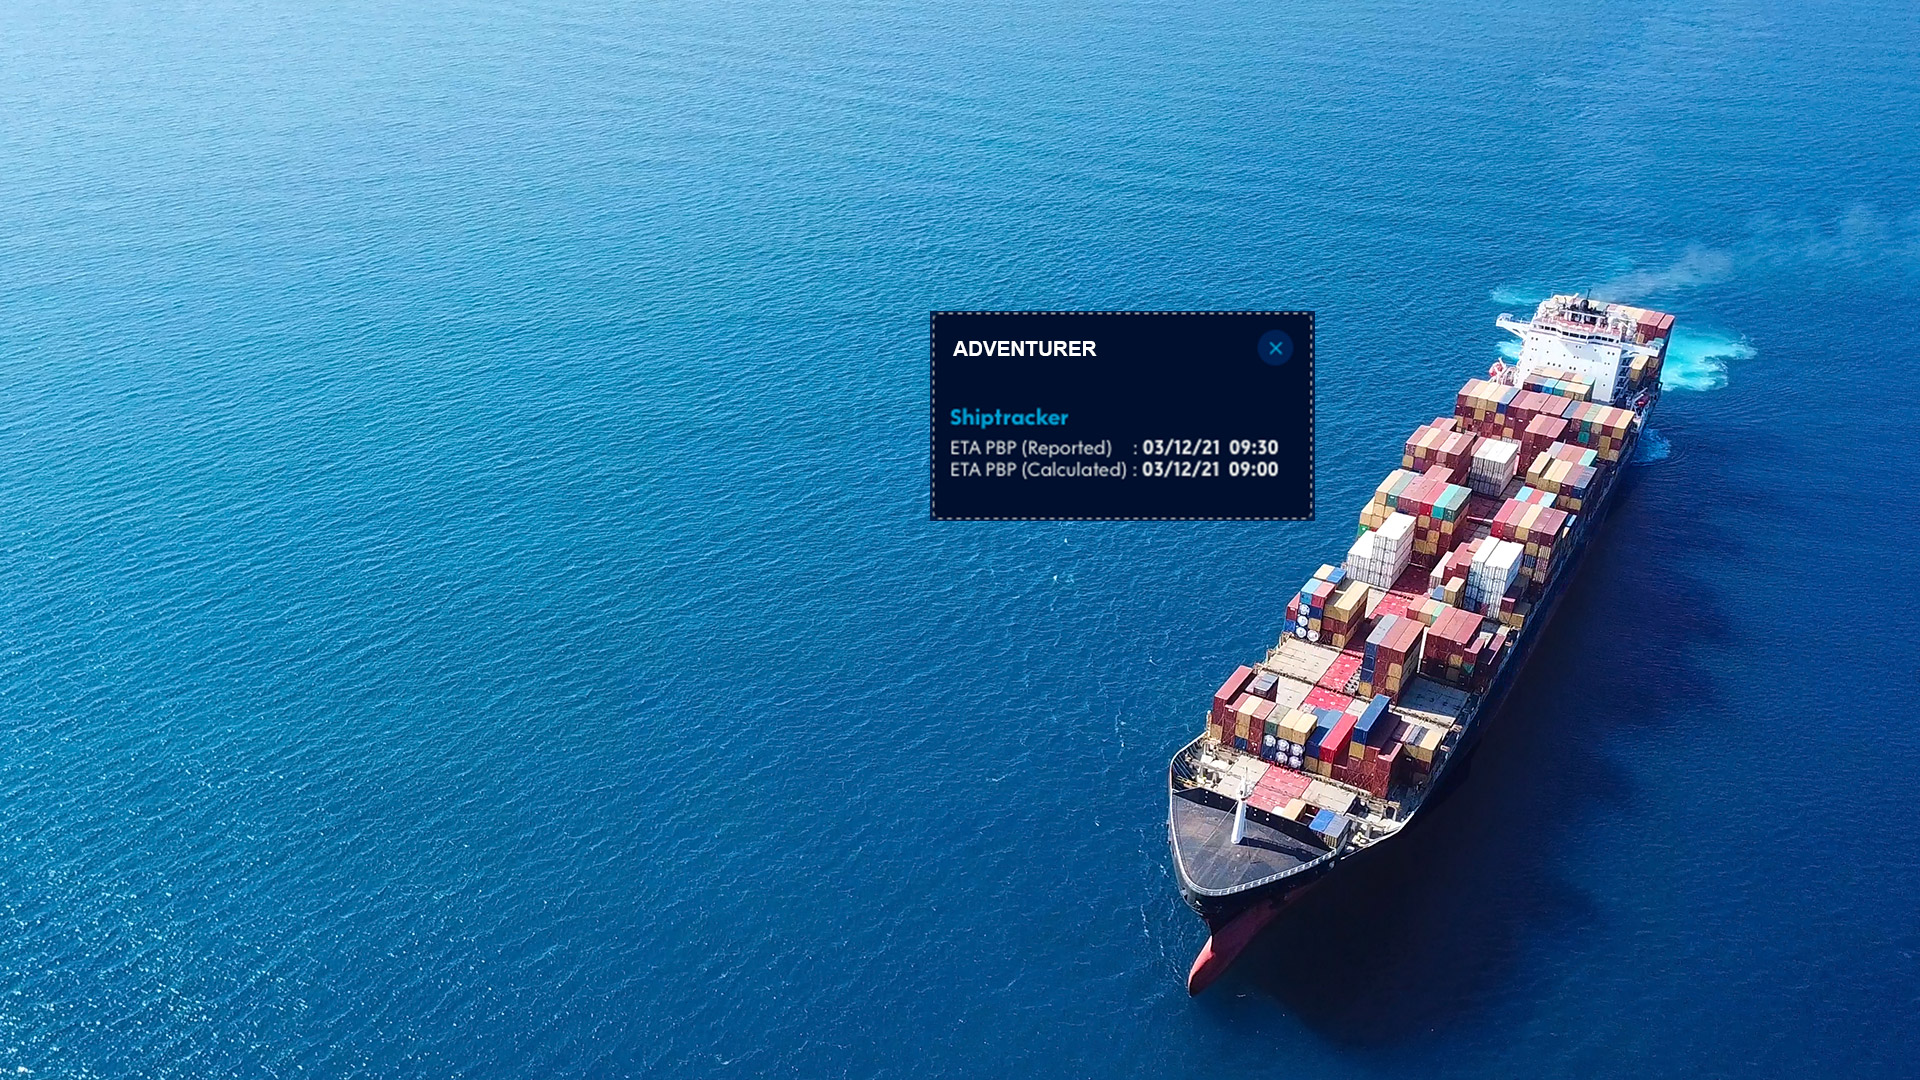 PortXchange Shiptracker launched globally